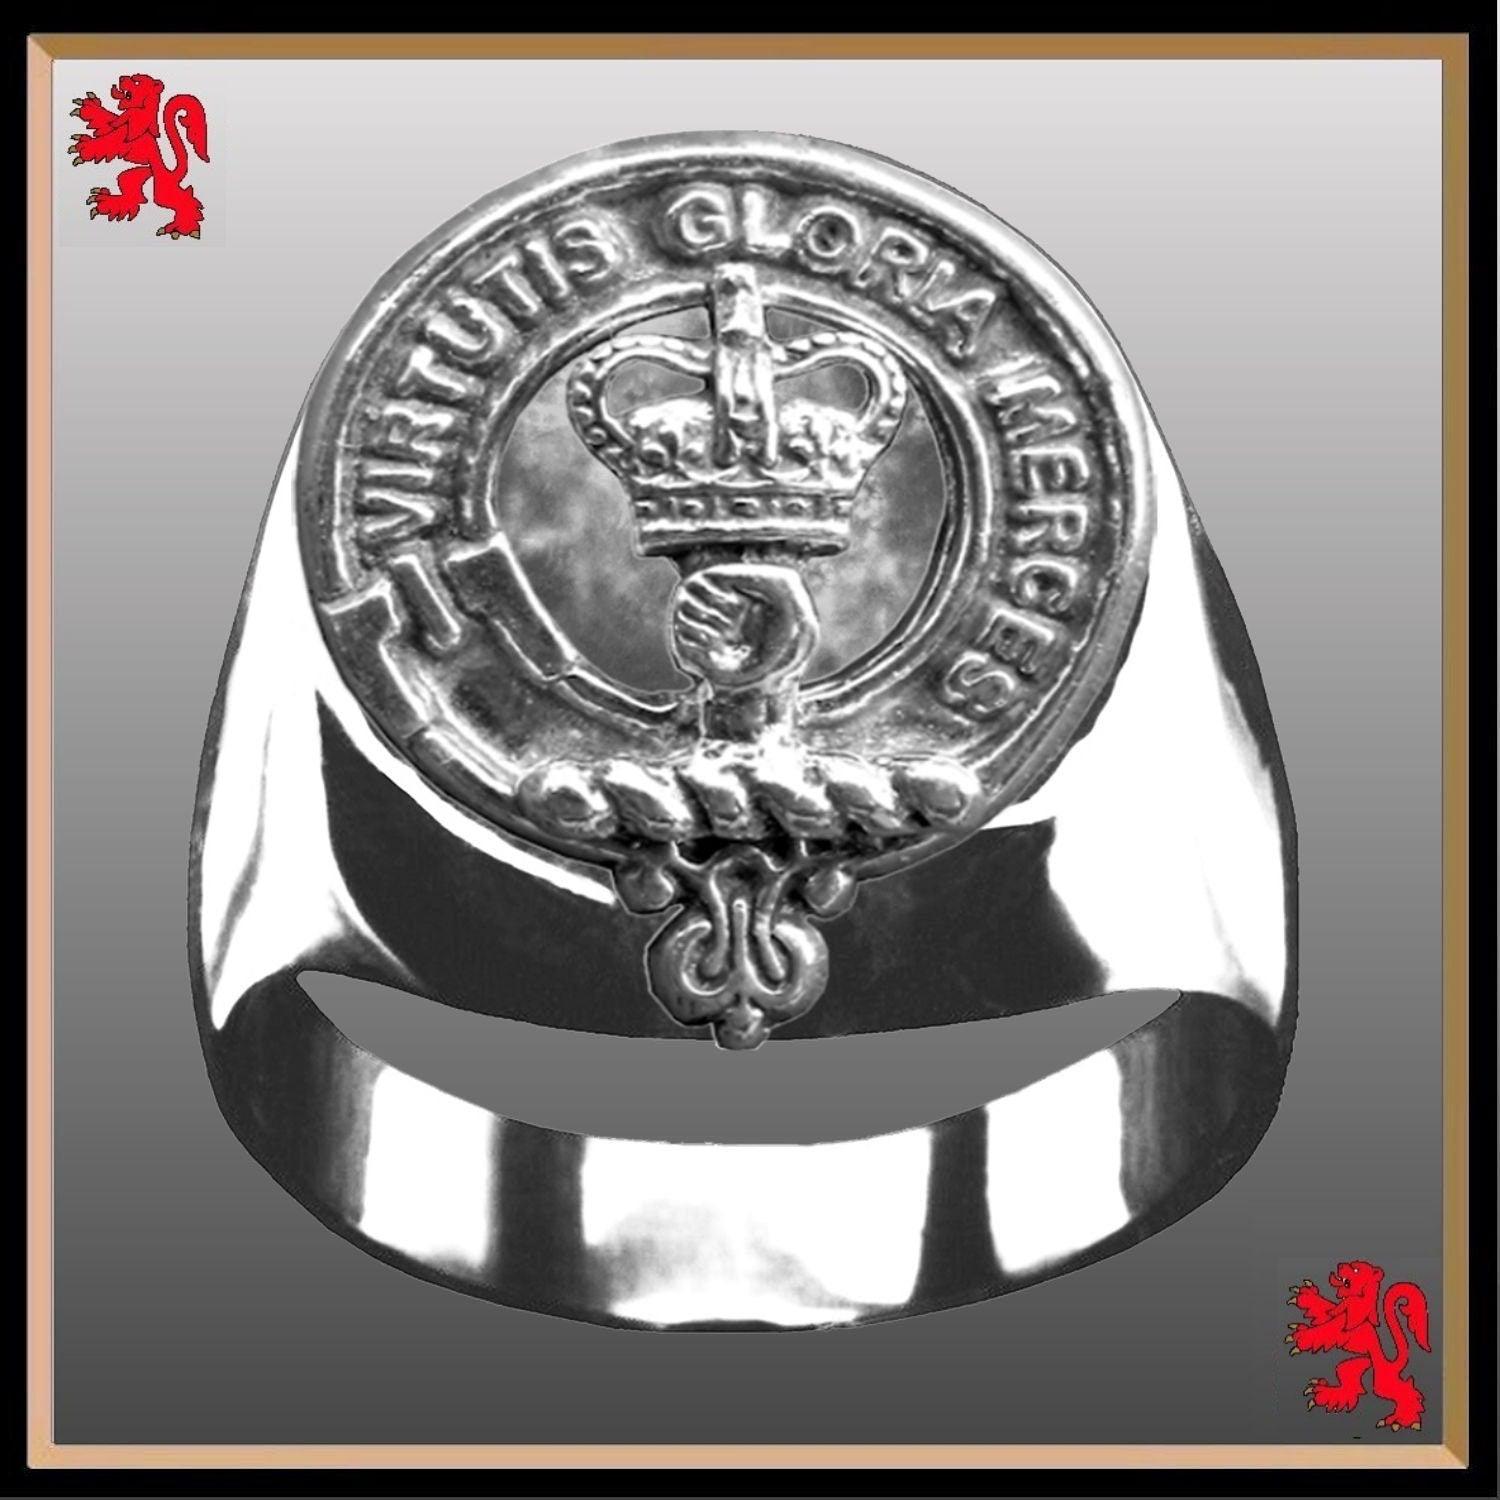 Robertson Scottish Clan Crest Ring GC100  ~  Sterling Silver and Karat Gold